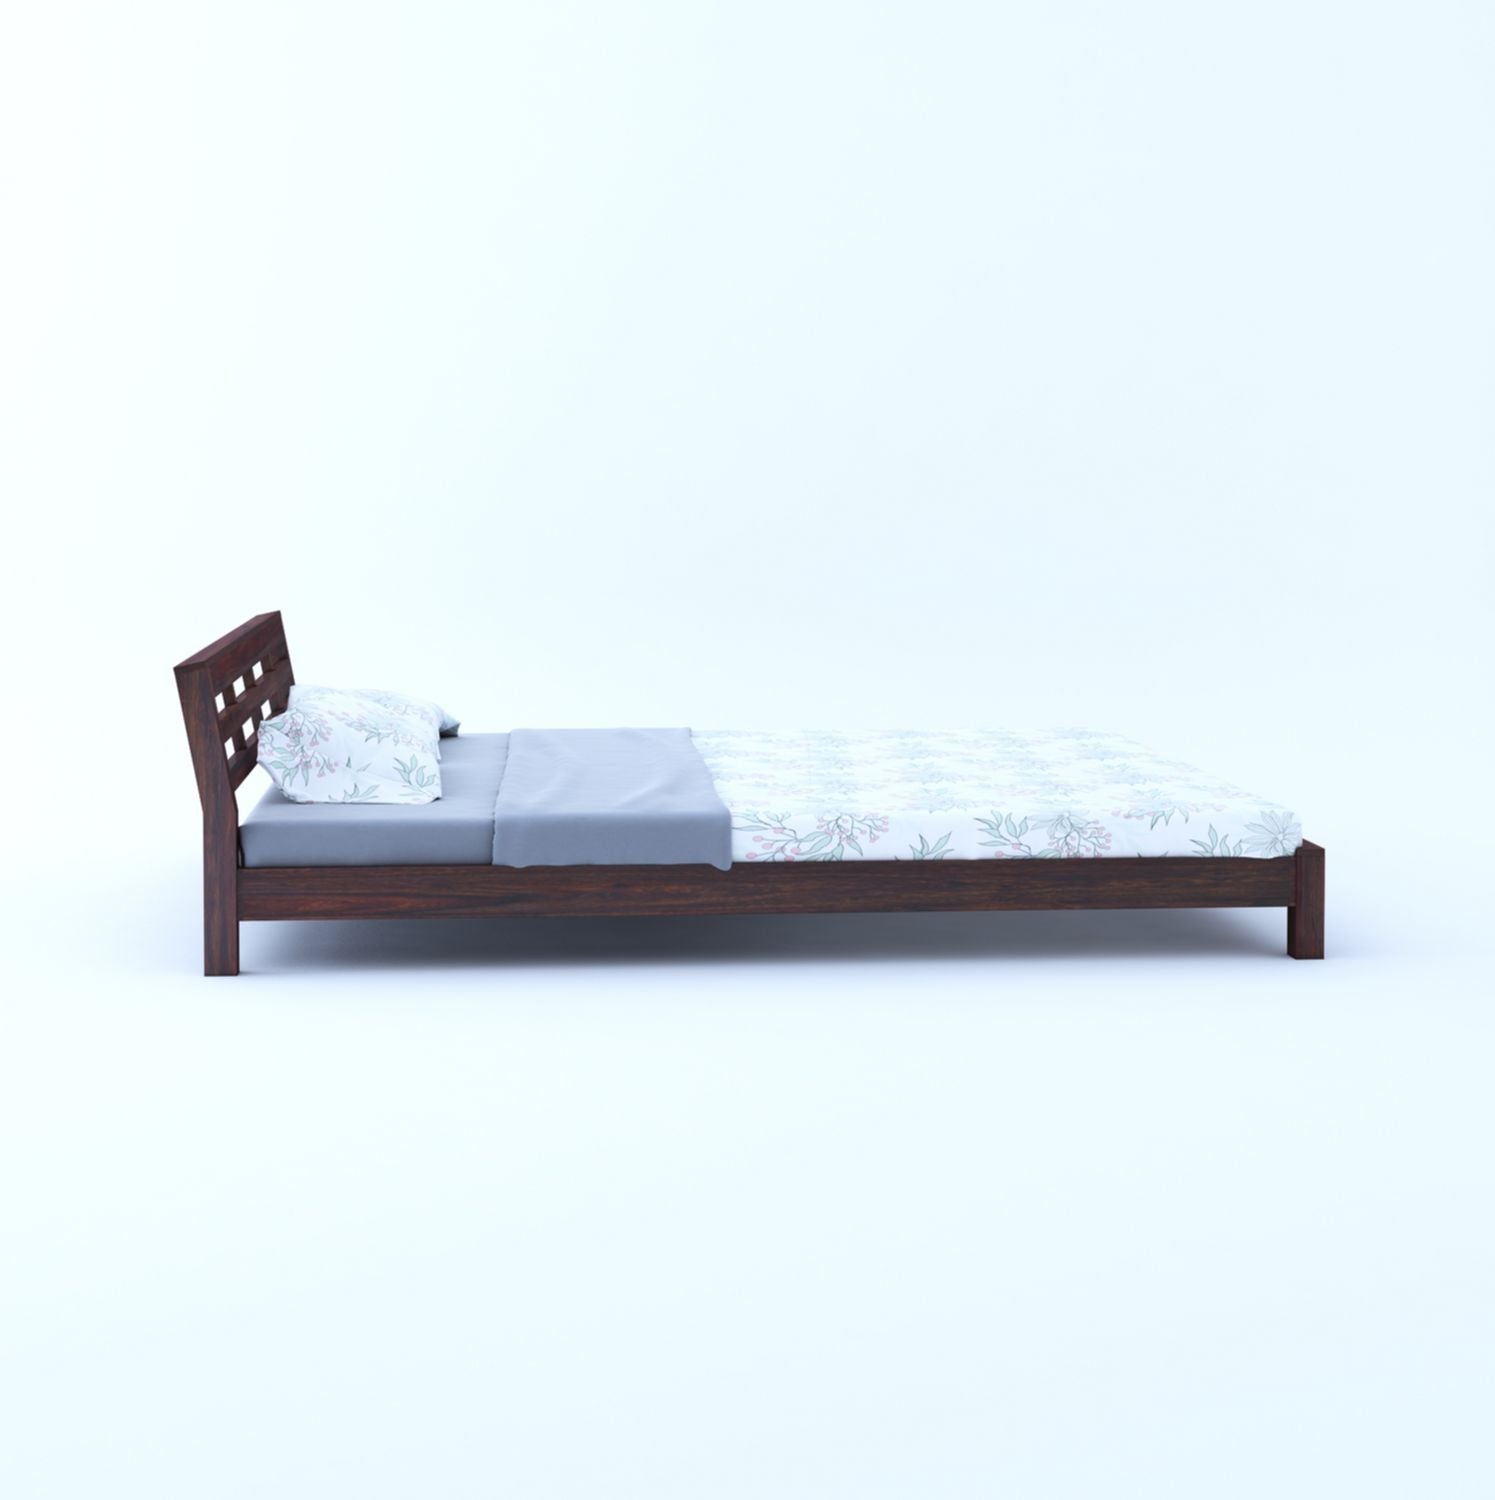 Essen Solid Sheesham Wood Bed Without Storage (King Size, Walnut Finish)